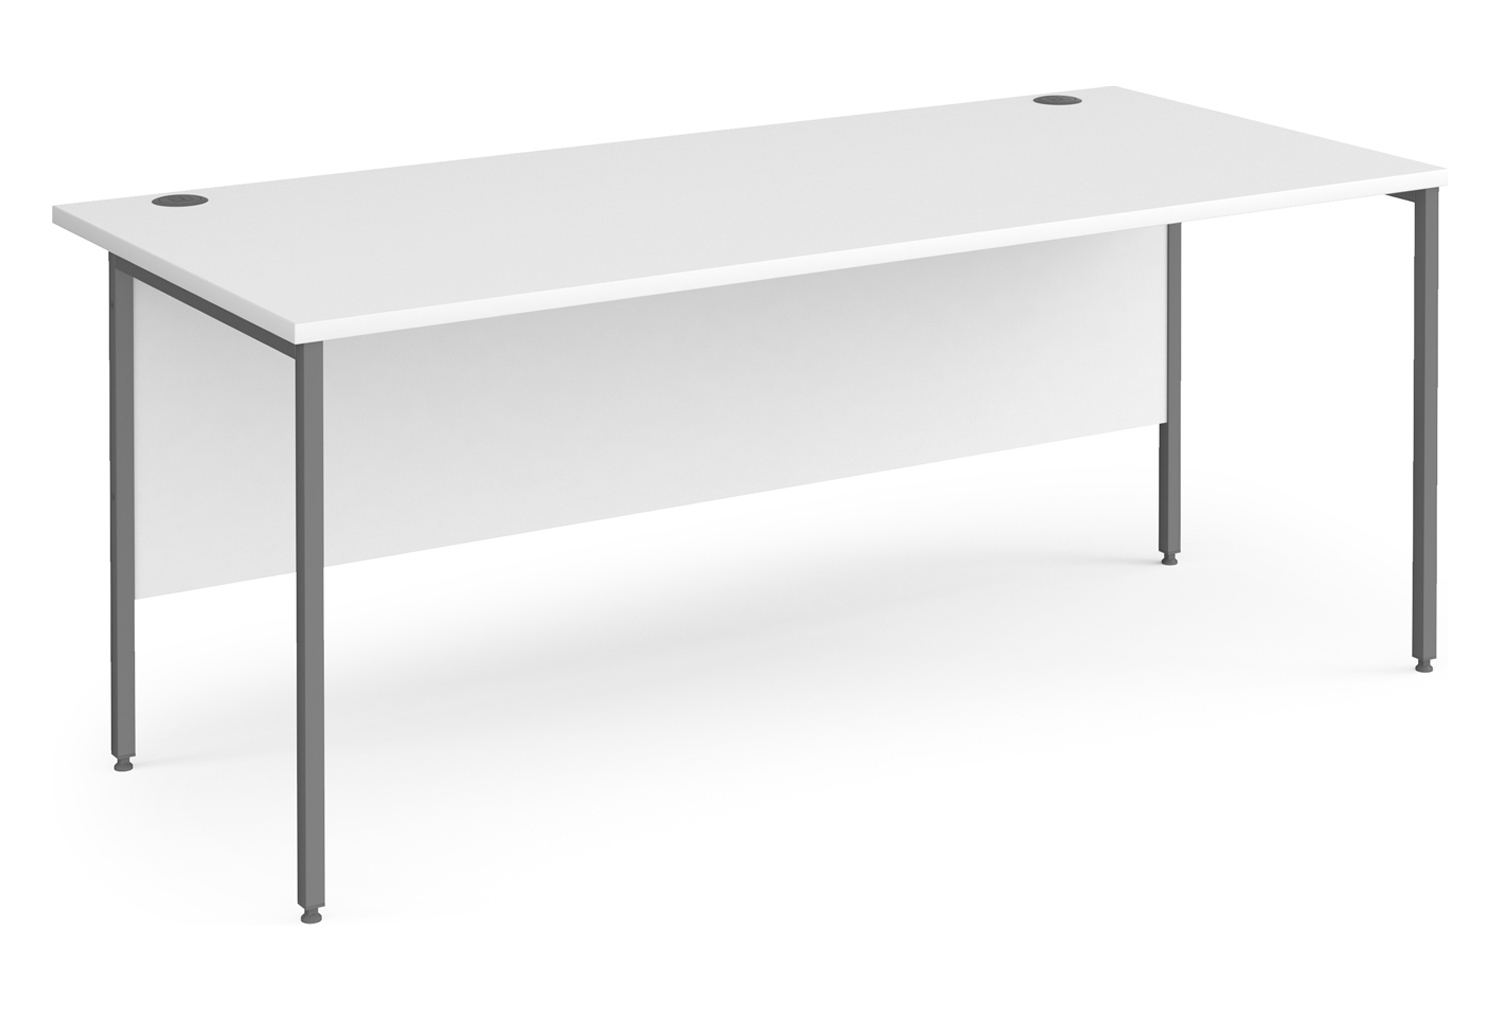 Value Line Classic+ Rectangular H-Leg Office Desk (Graphite Leg), 180wx80dx73h (cm), White, Express Delivery